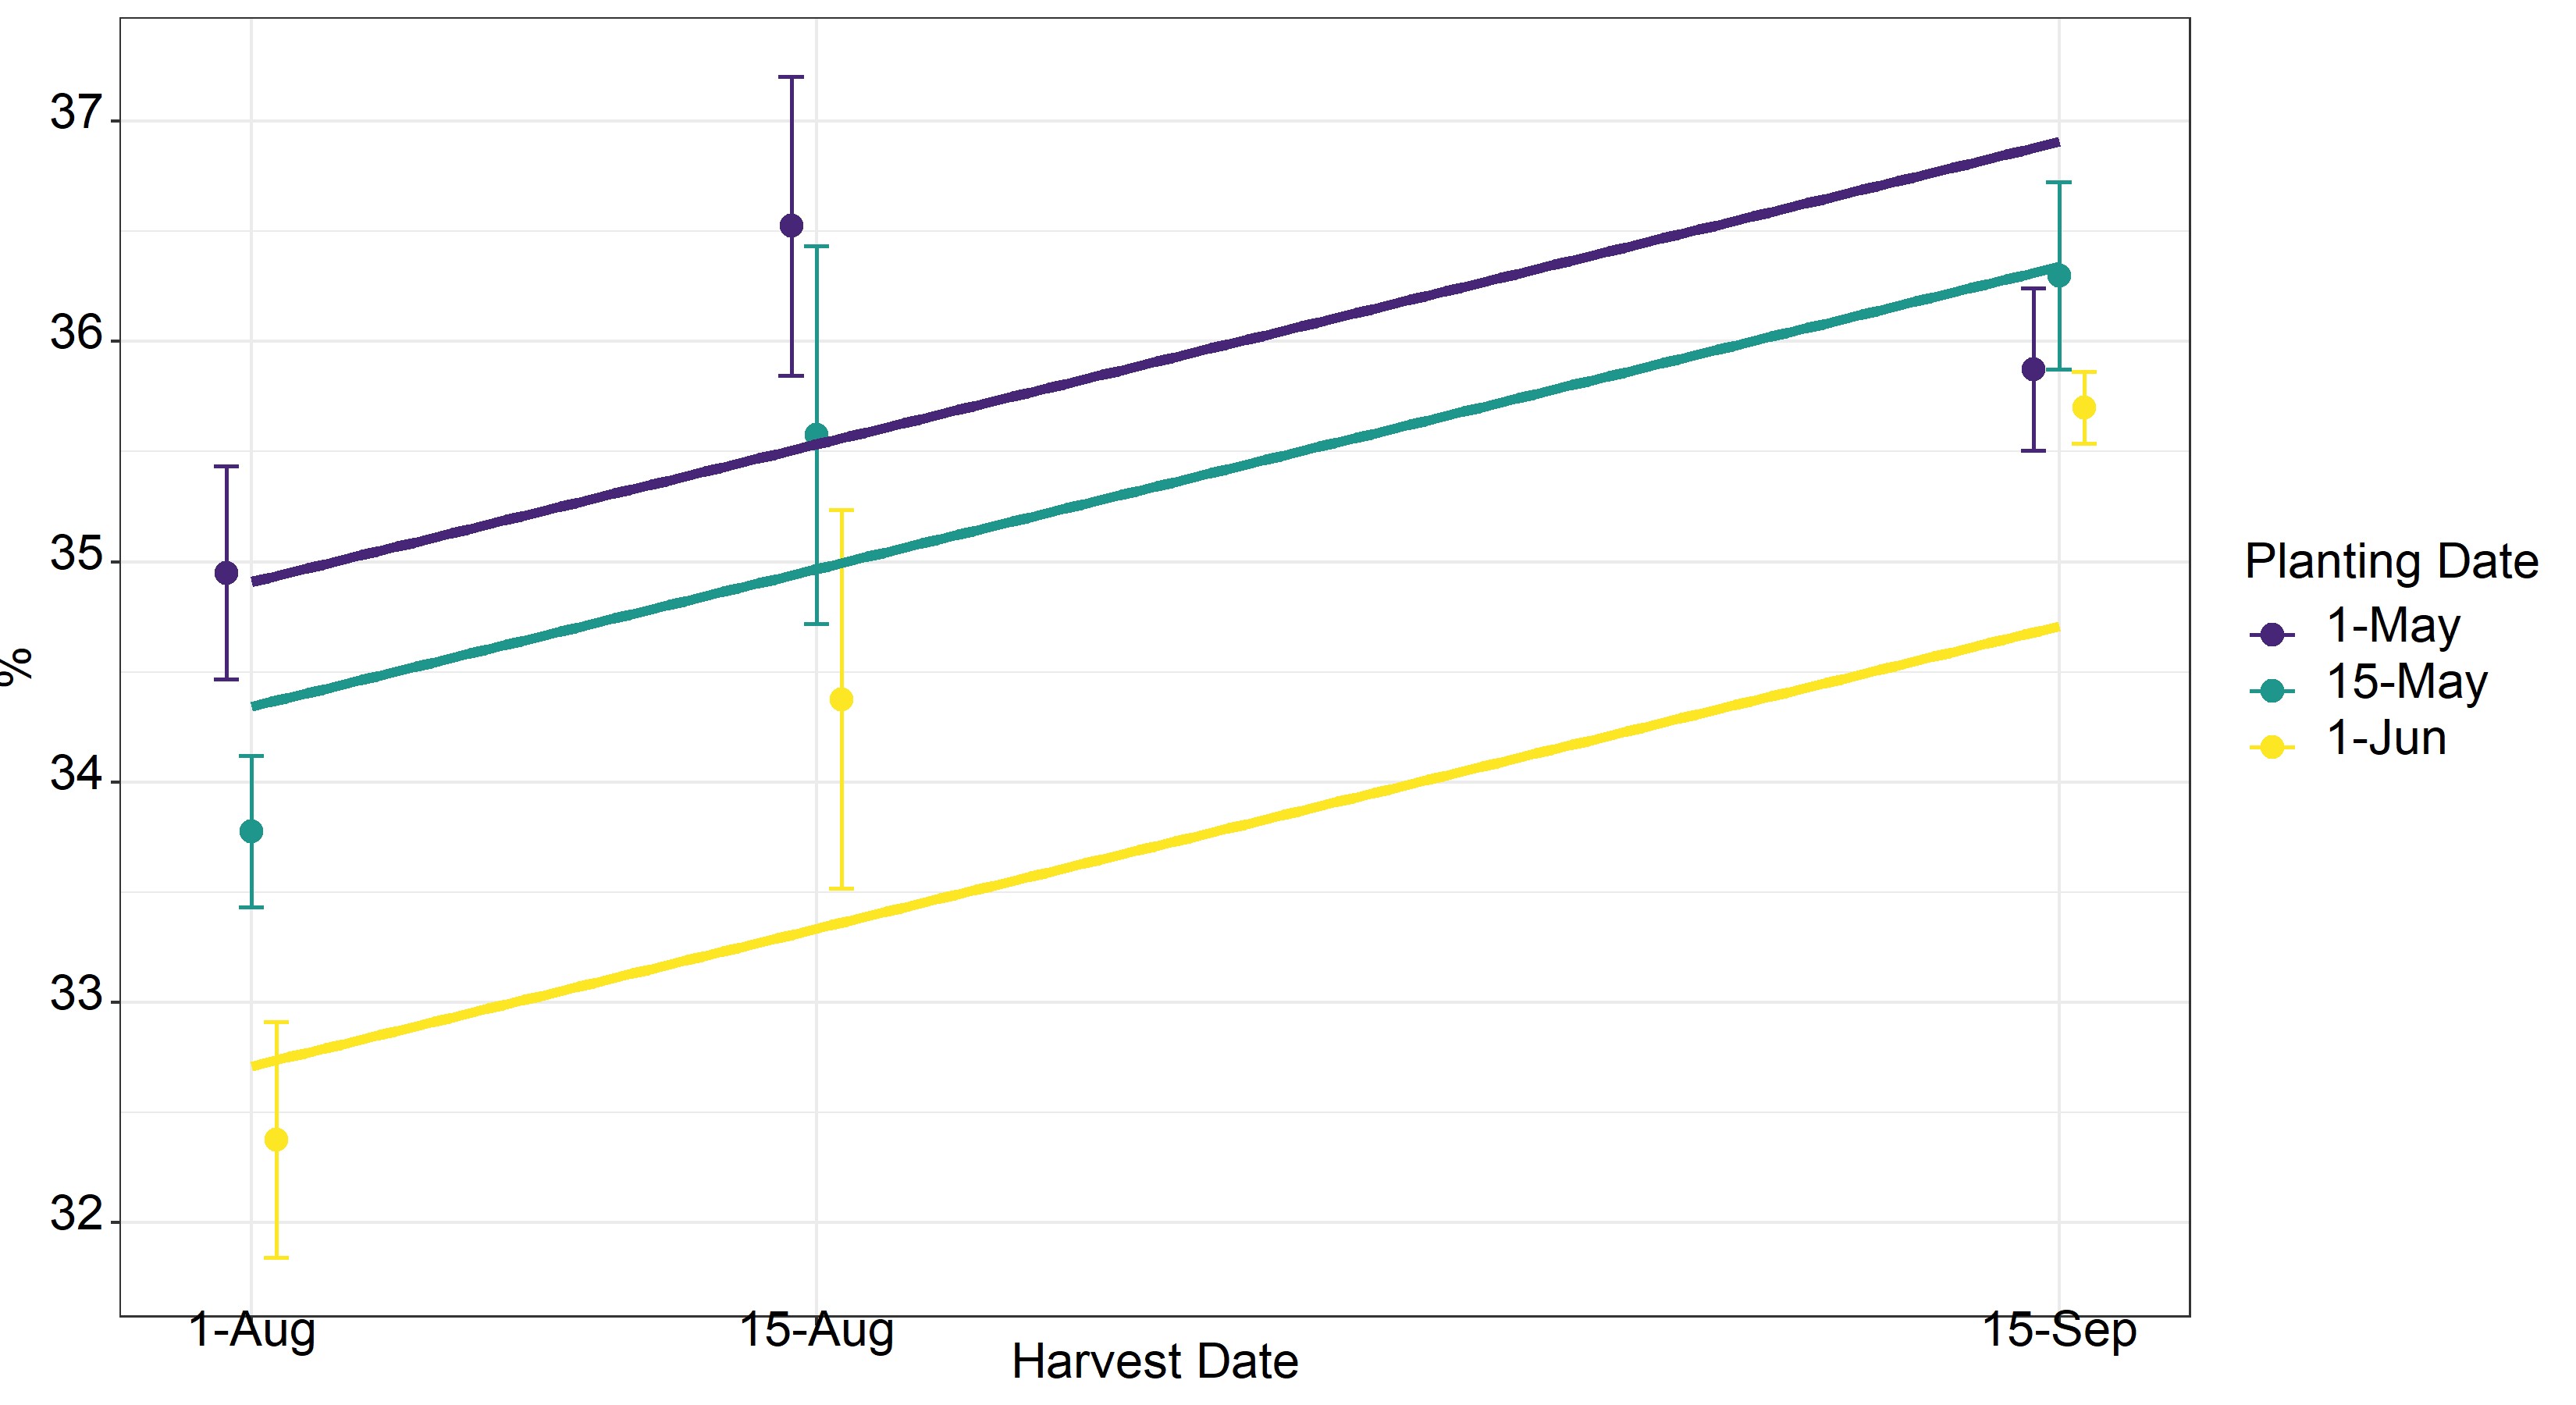 Figure of ADF % over harvest date